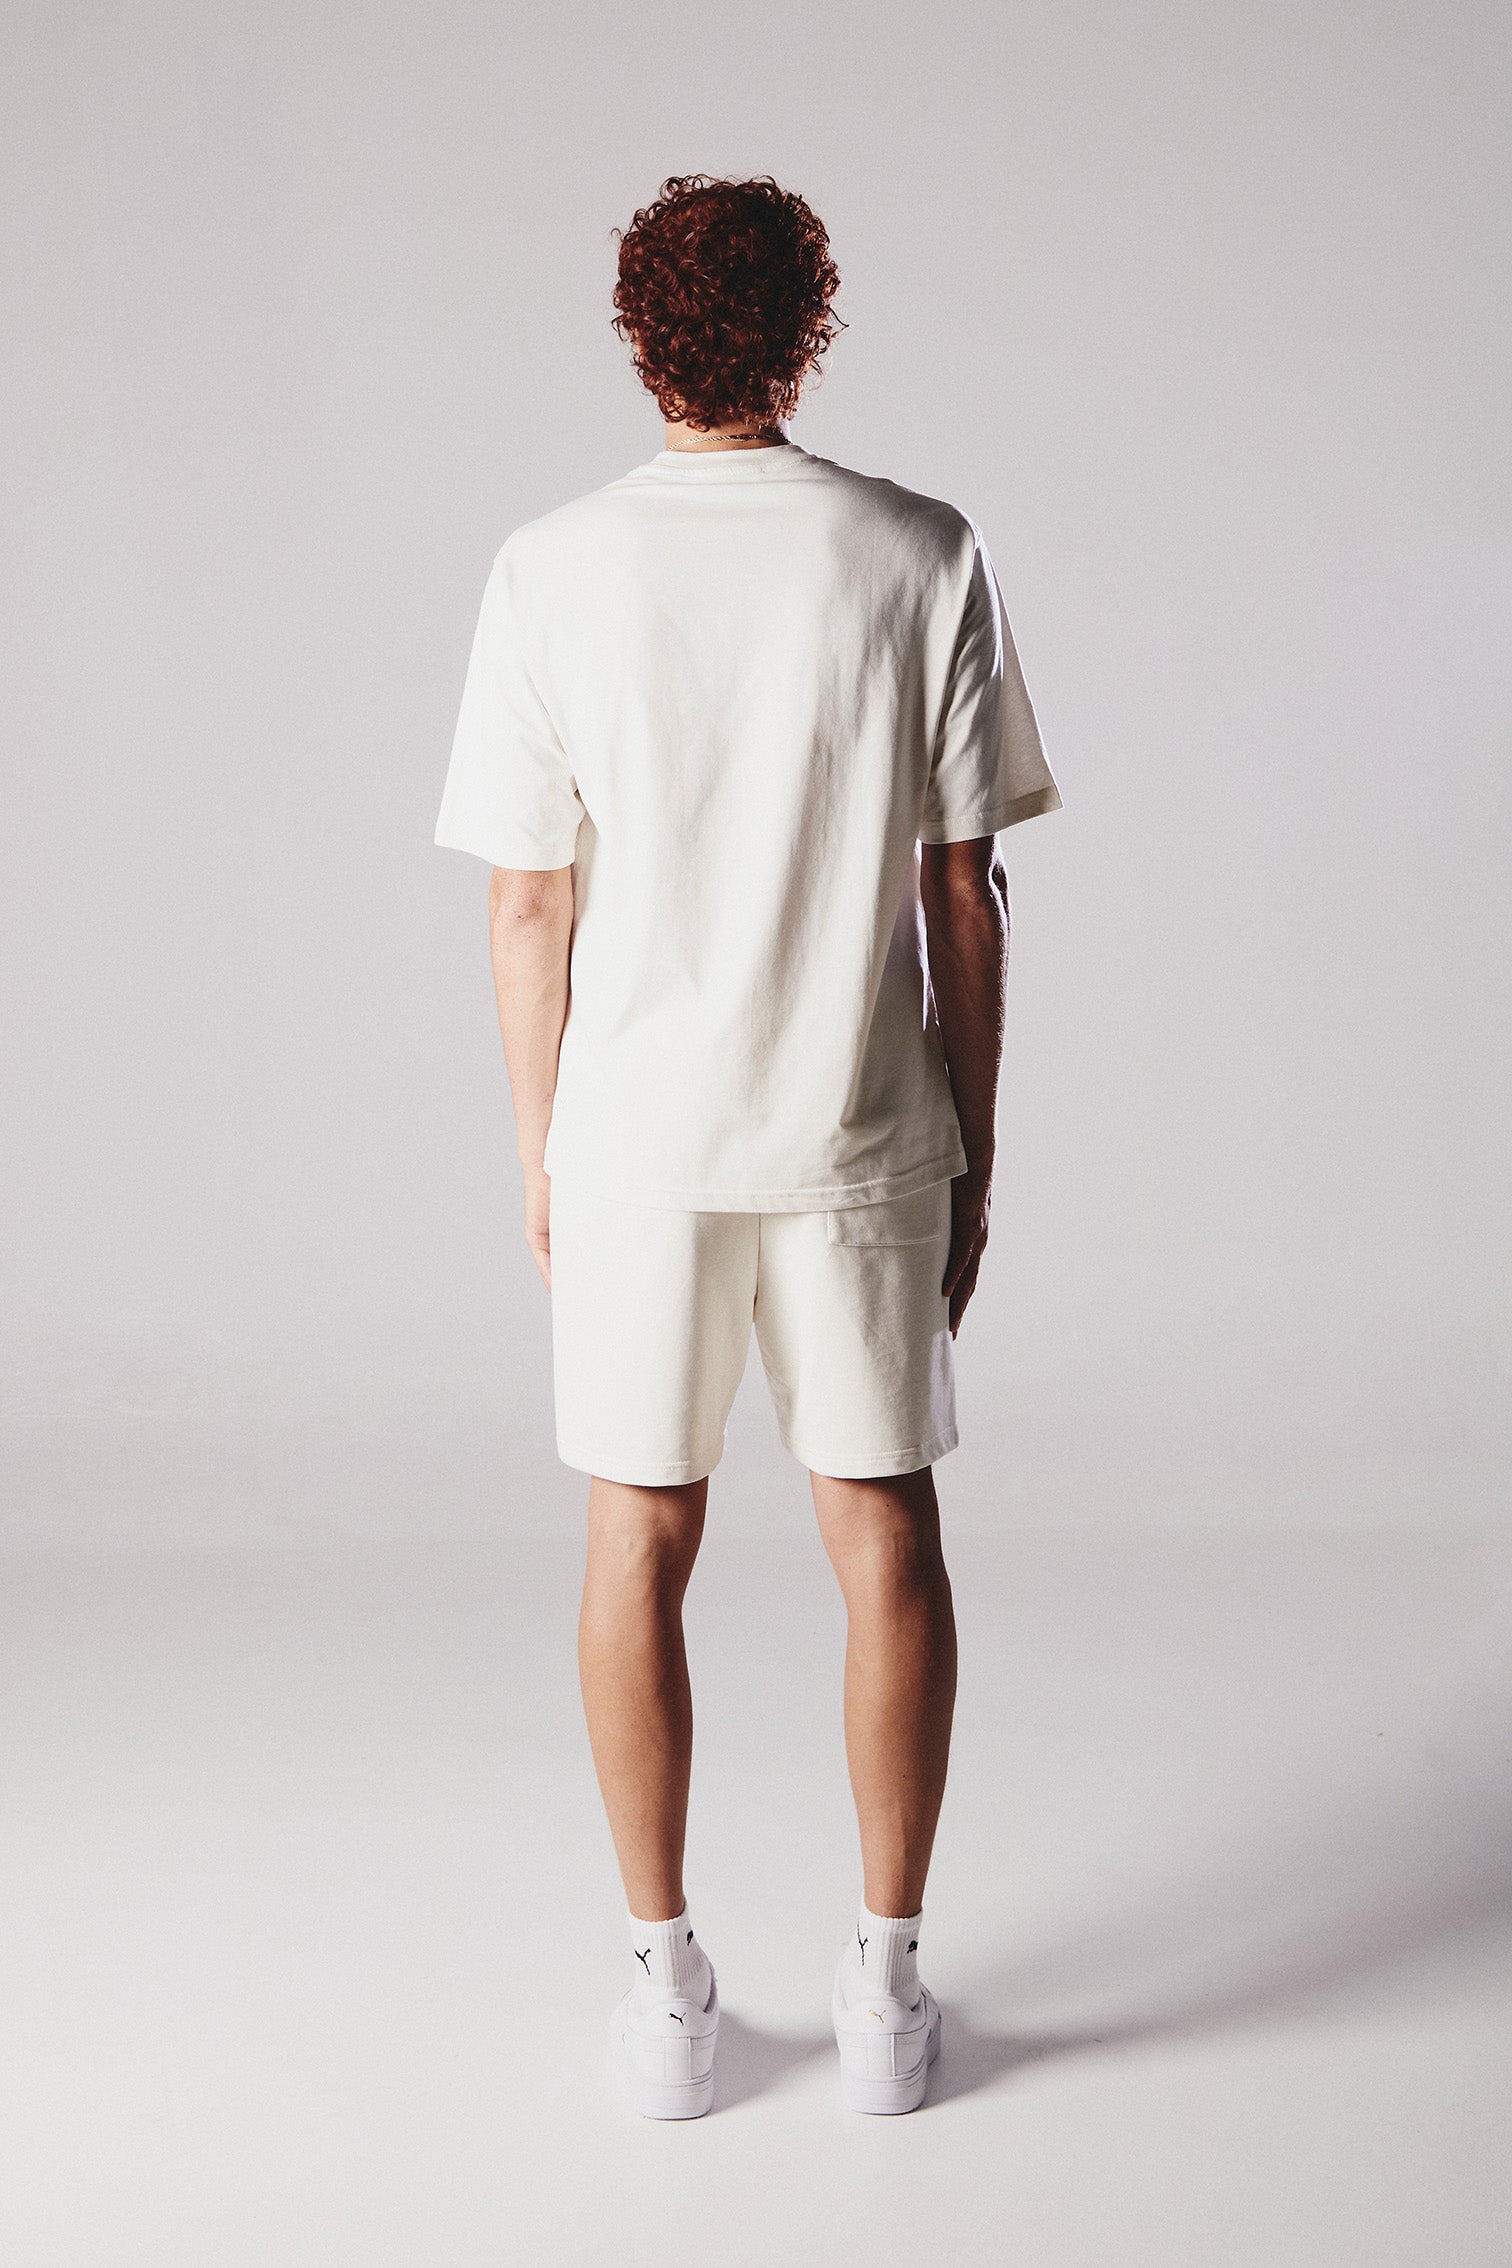 MDC AOP Shirt White – Memphis Depay Clothing